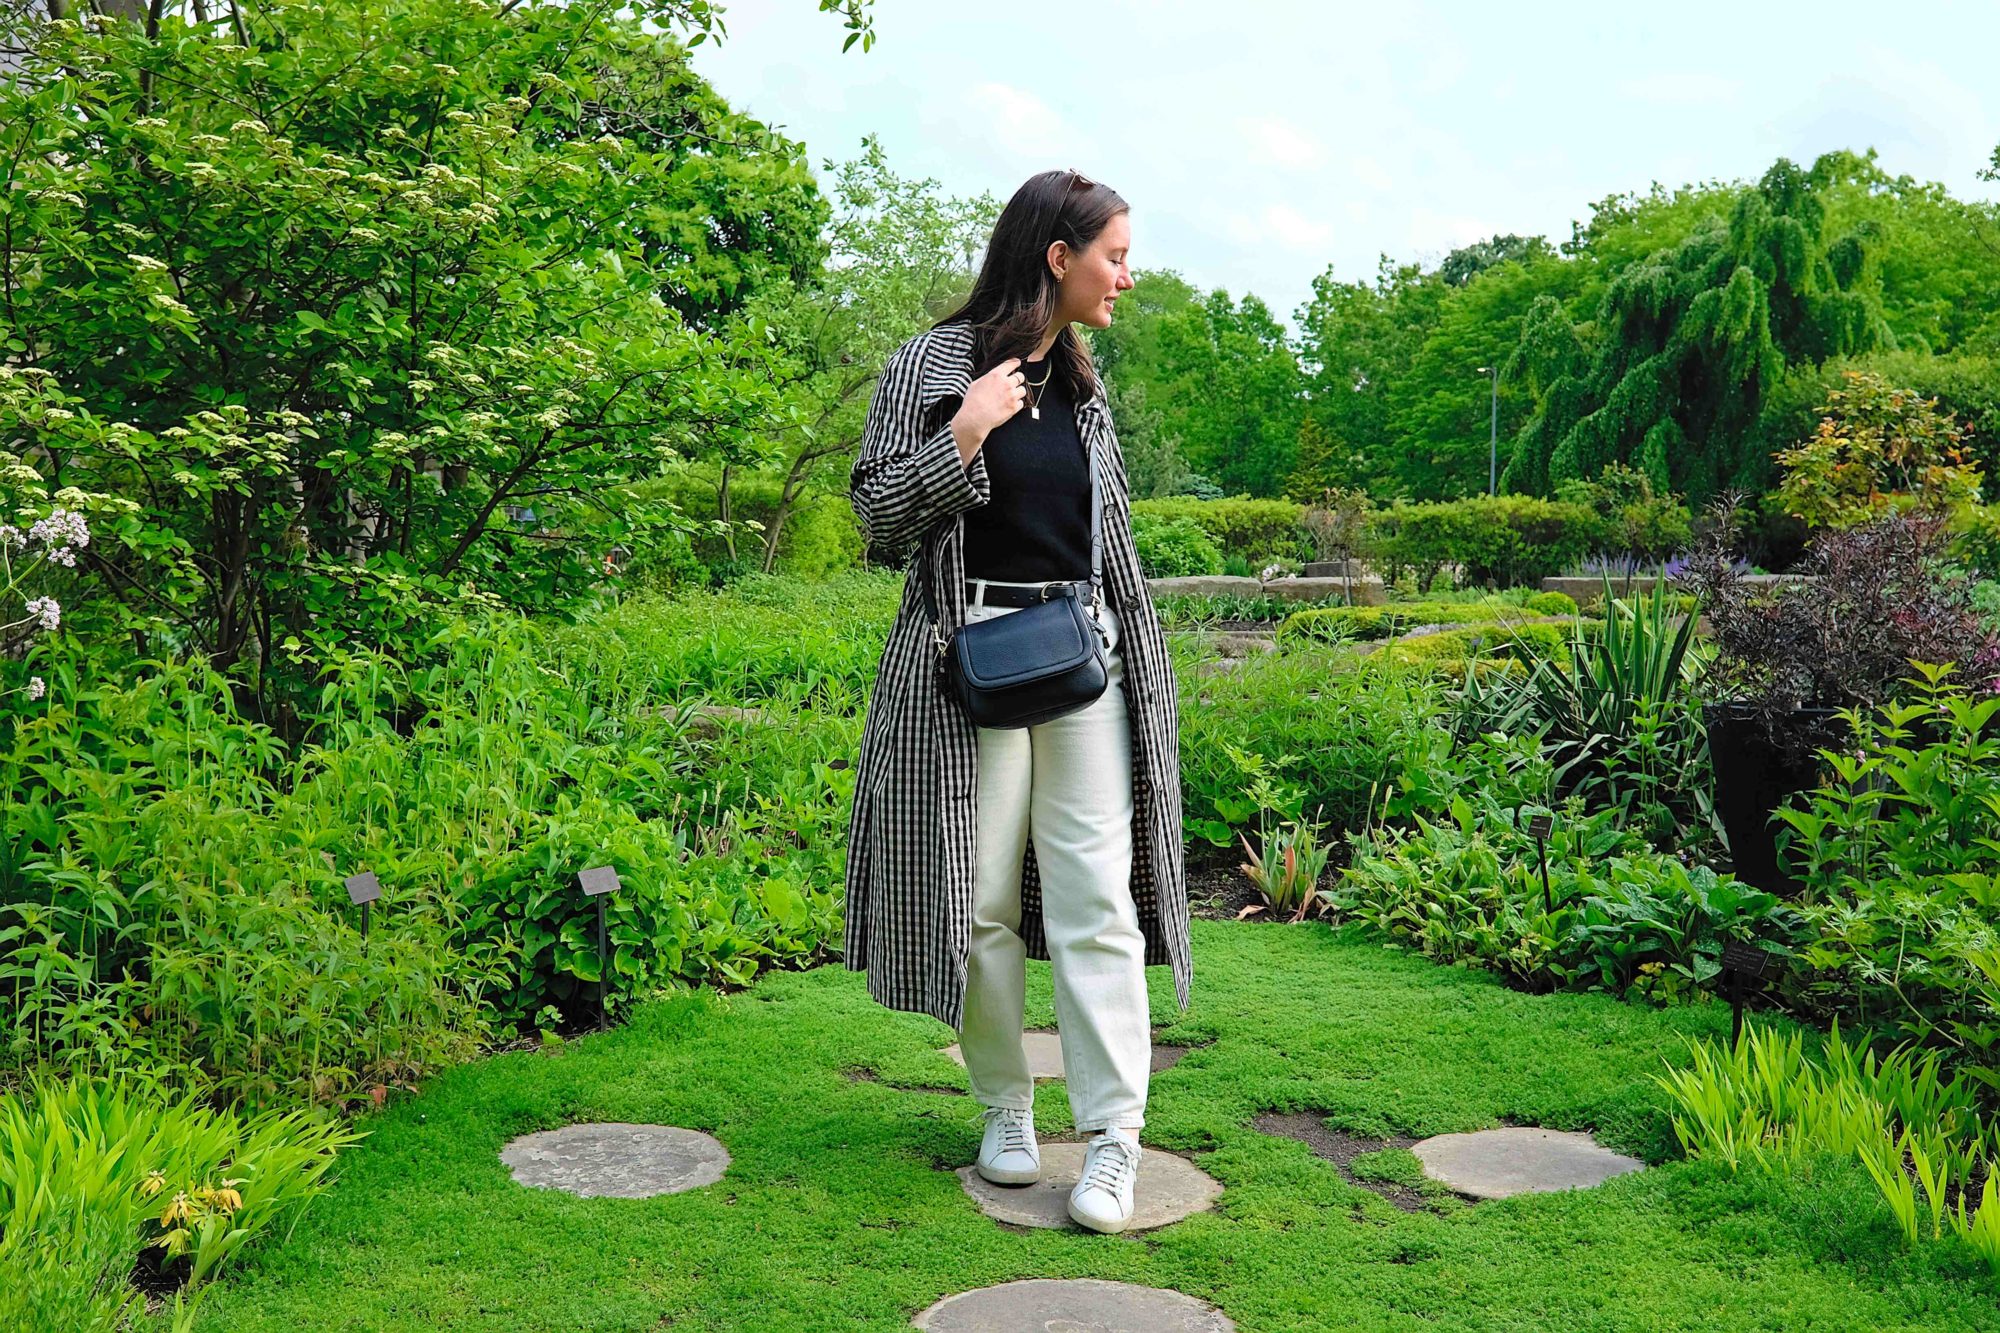 Alyssa walks through the gardens